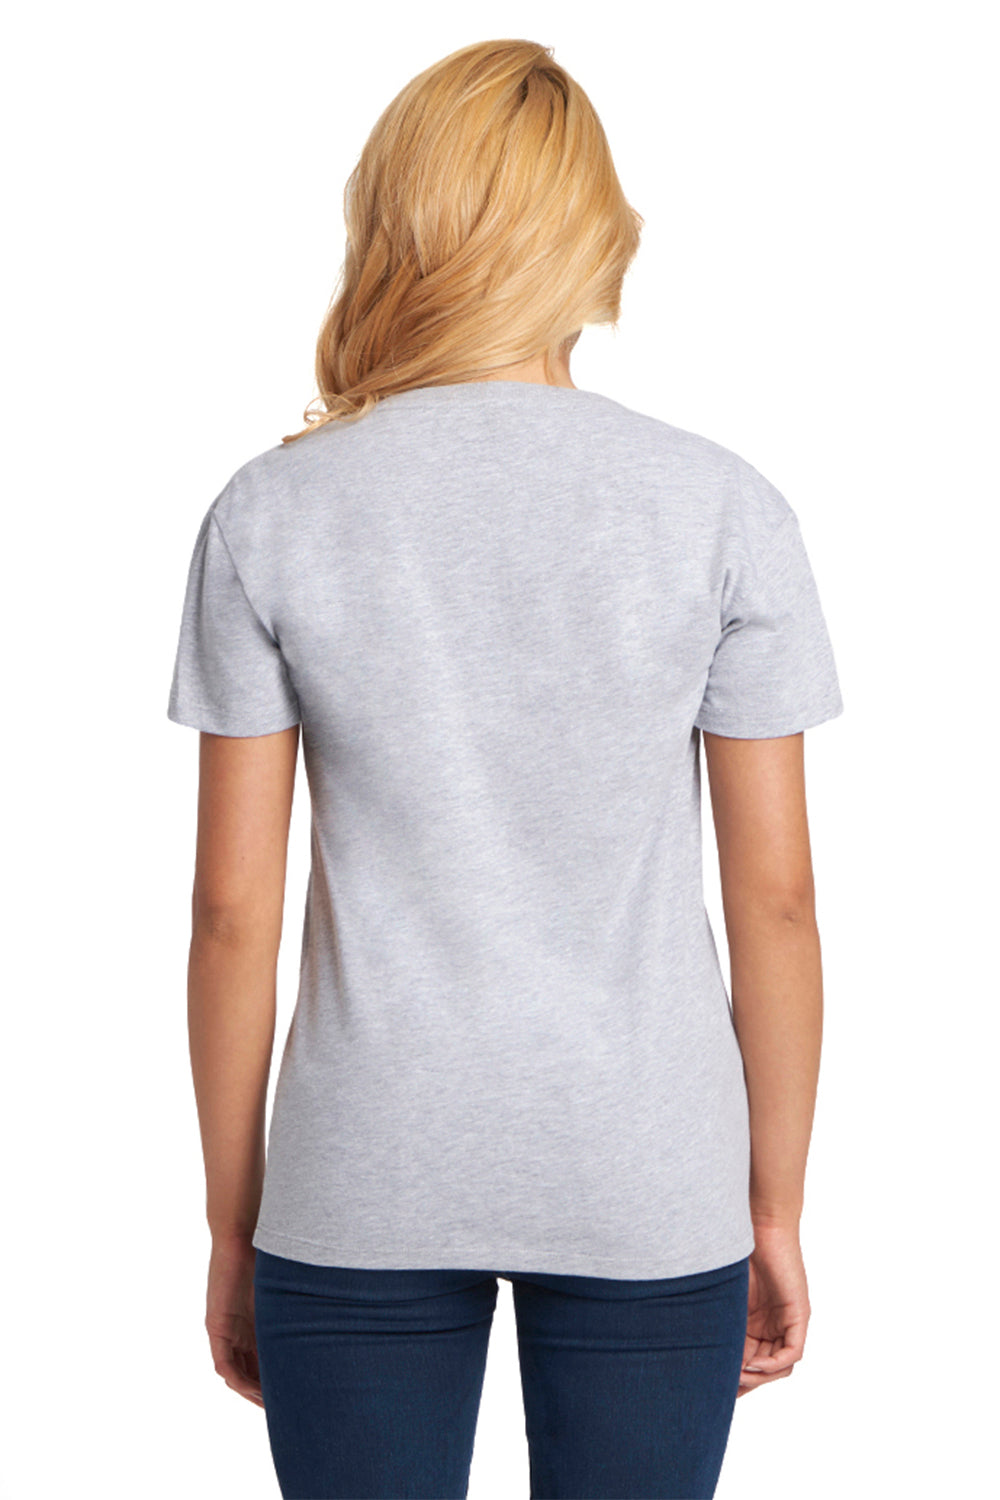 Next Level 3940 Womens Relaxed Short Sleeve V-Neck T-Shirt Heather Grey Back